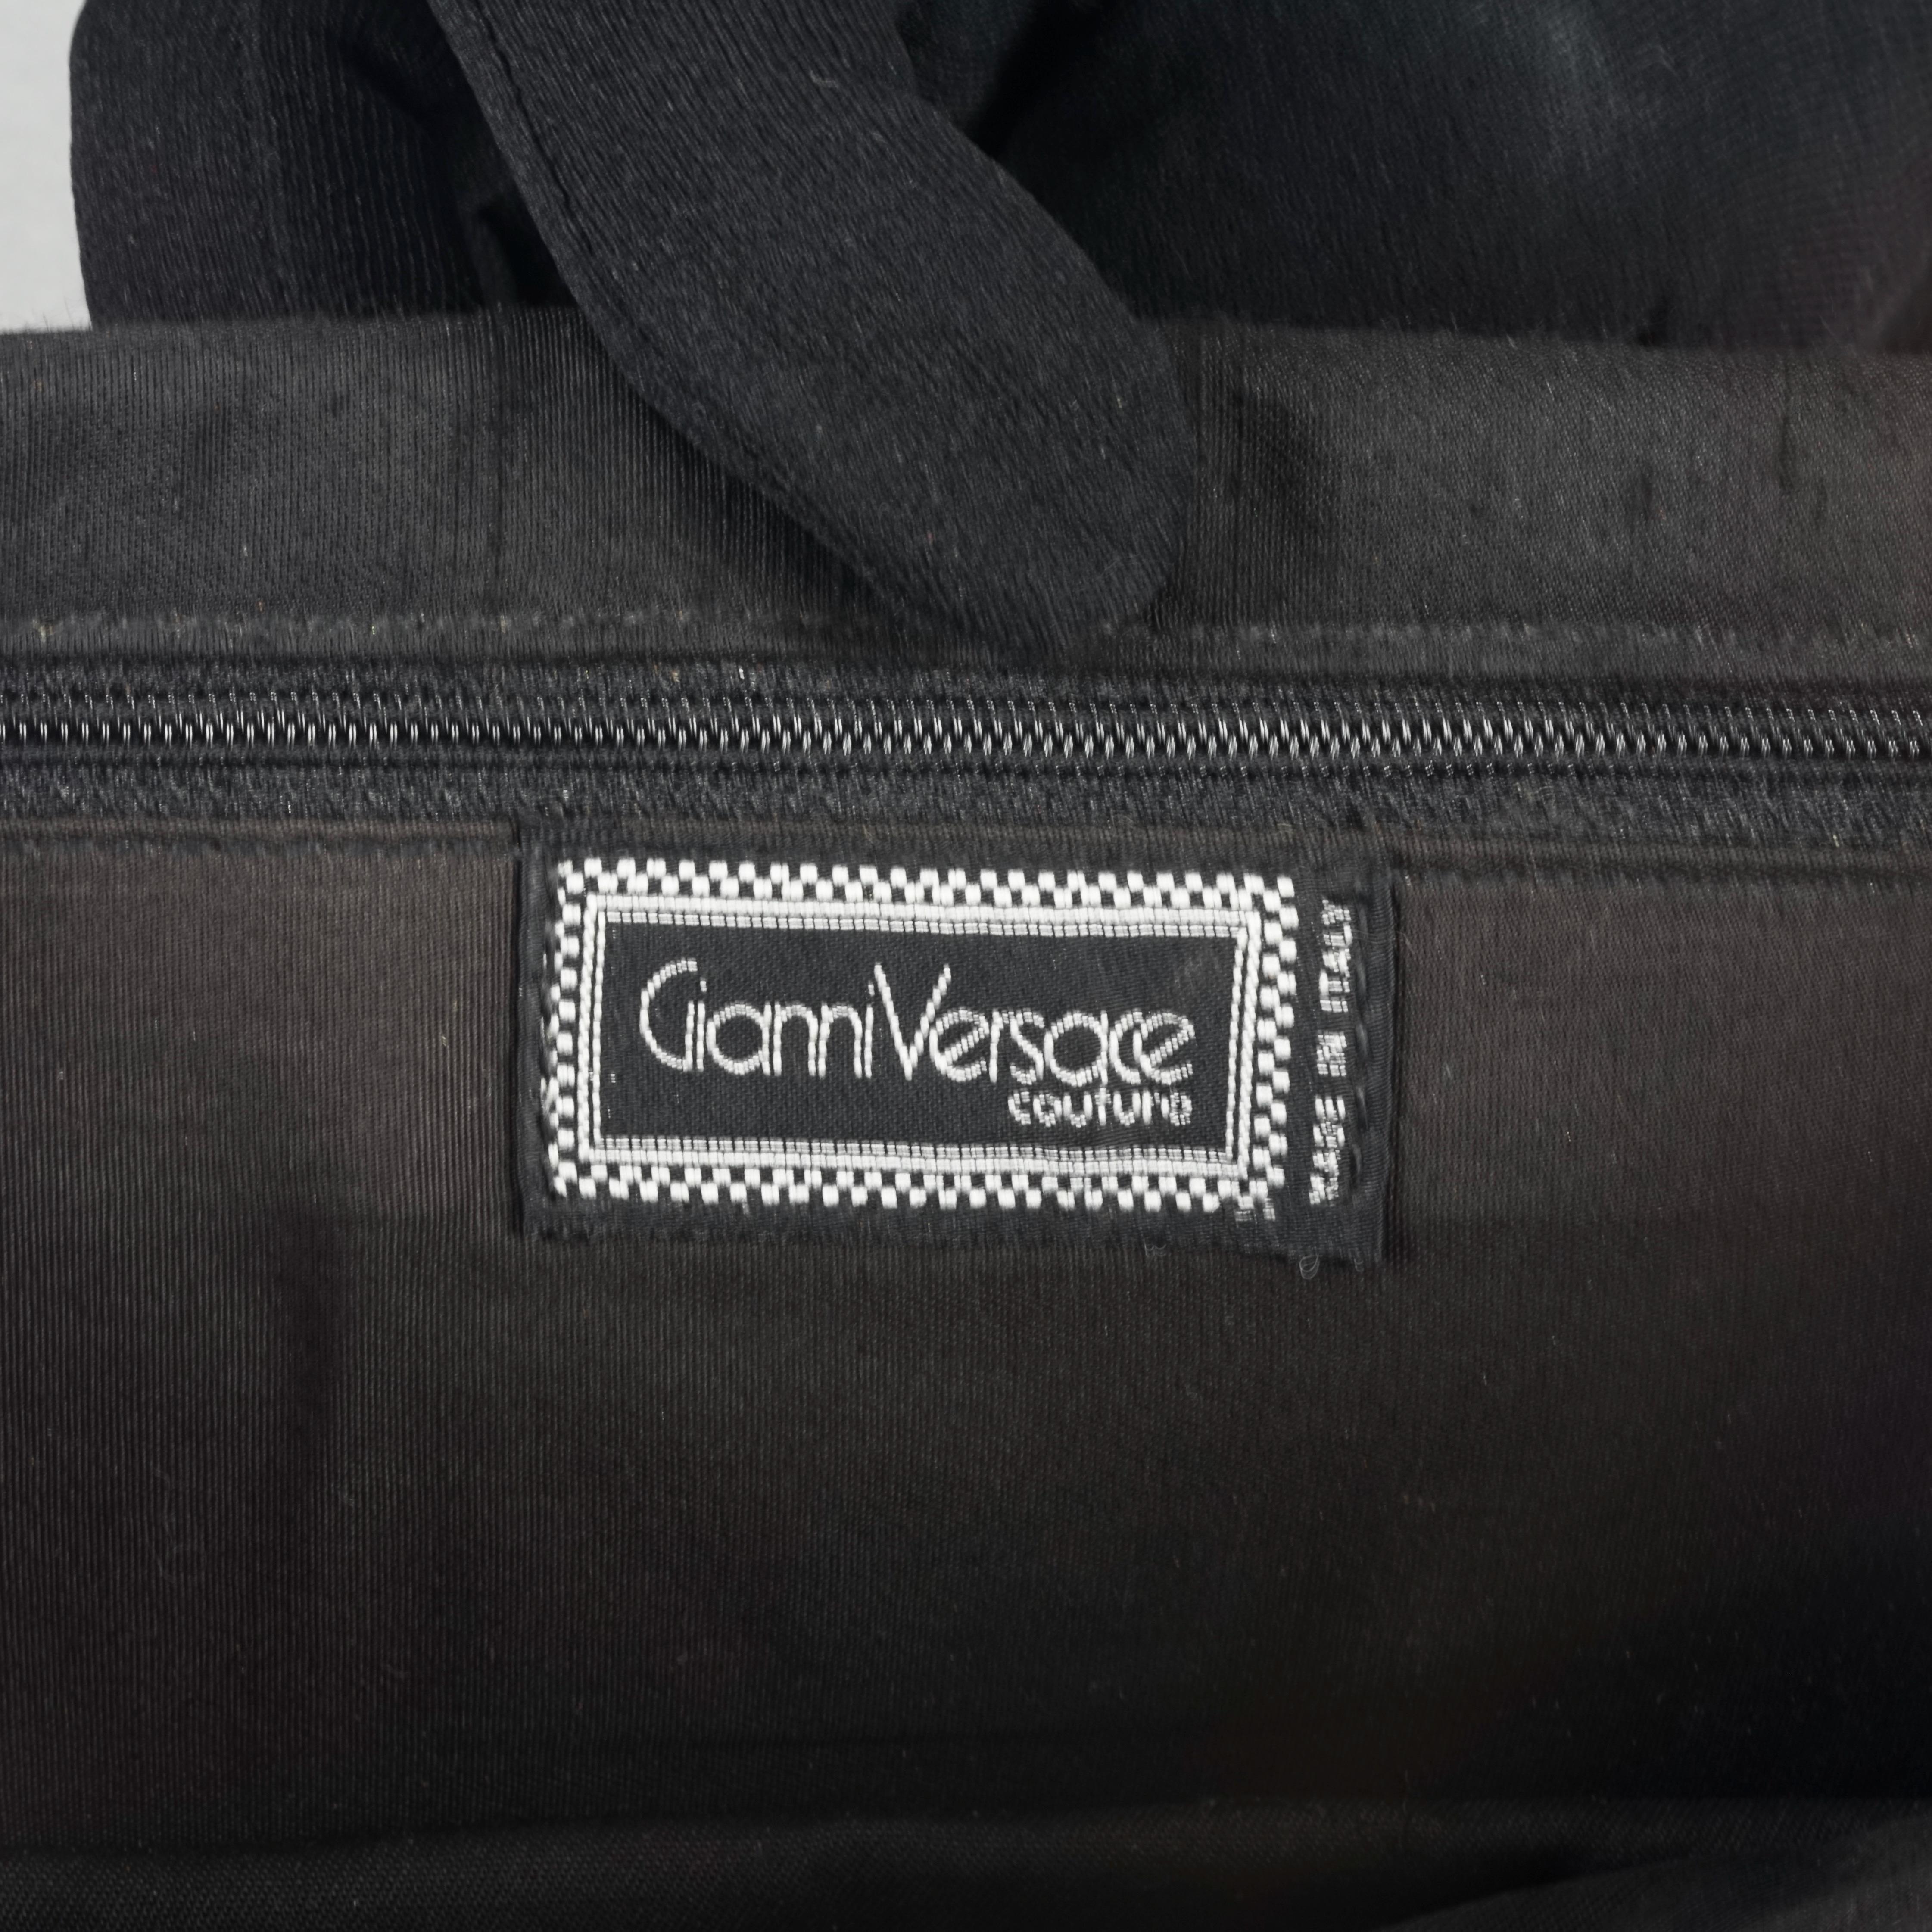 Vintage GIANNI VERSACE COUTURE Black Raw Silk Passementerie Tassel Clutch Bag For Sale 6